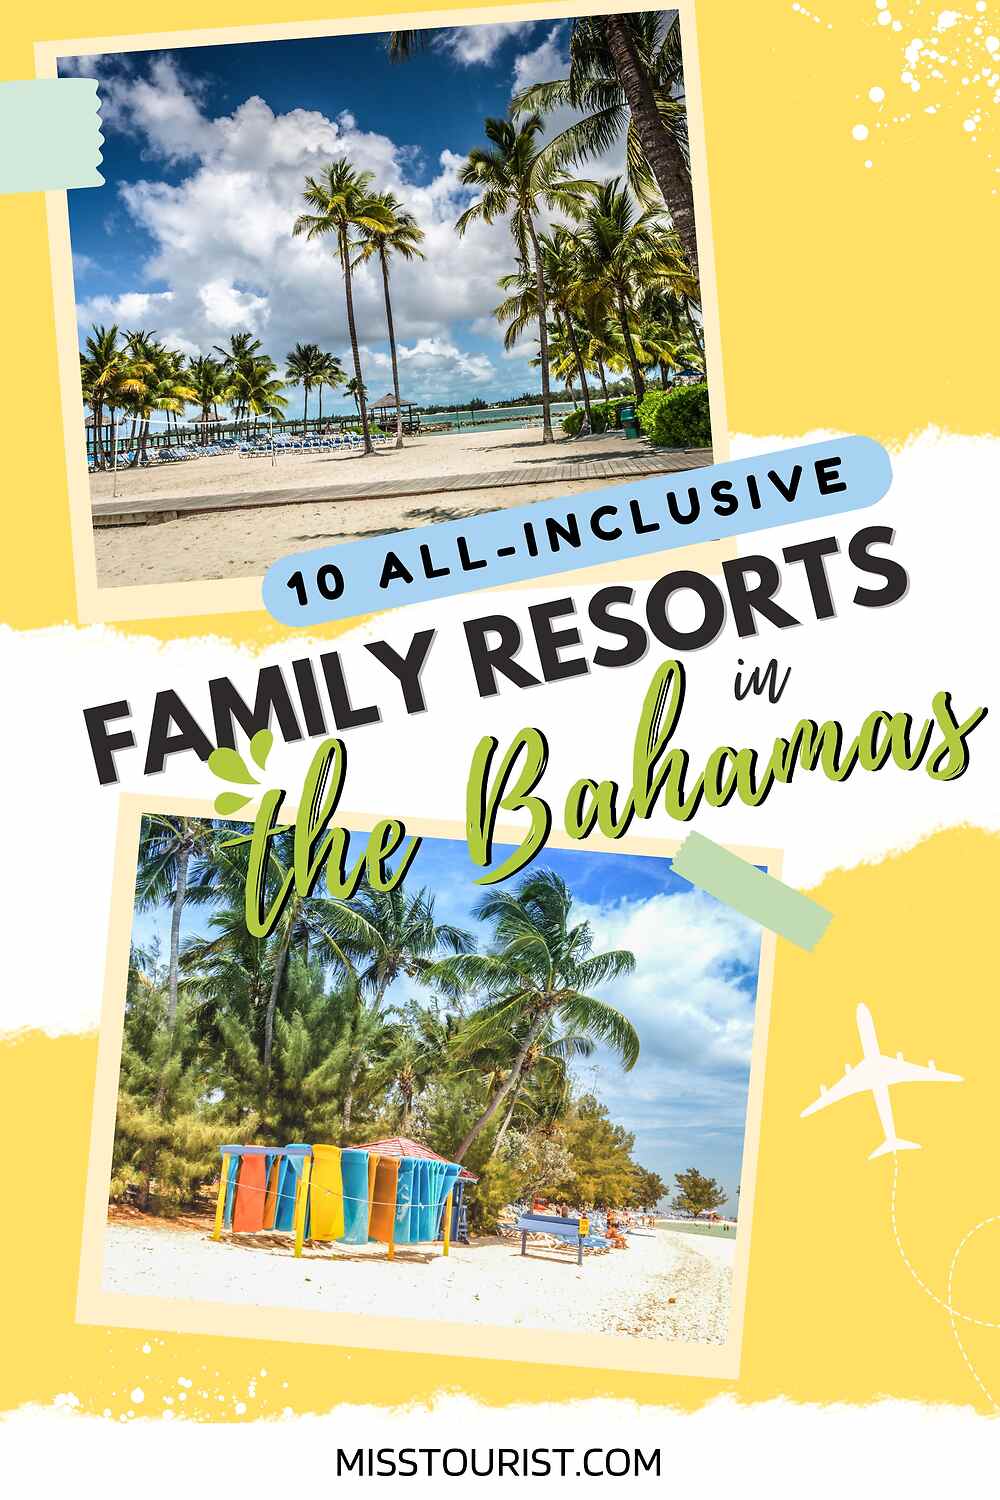 Bahamas all inclusive family resorts PIN 1